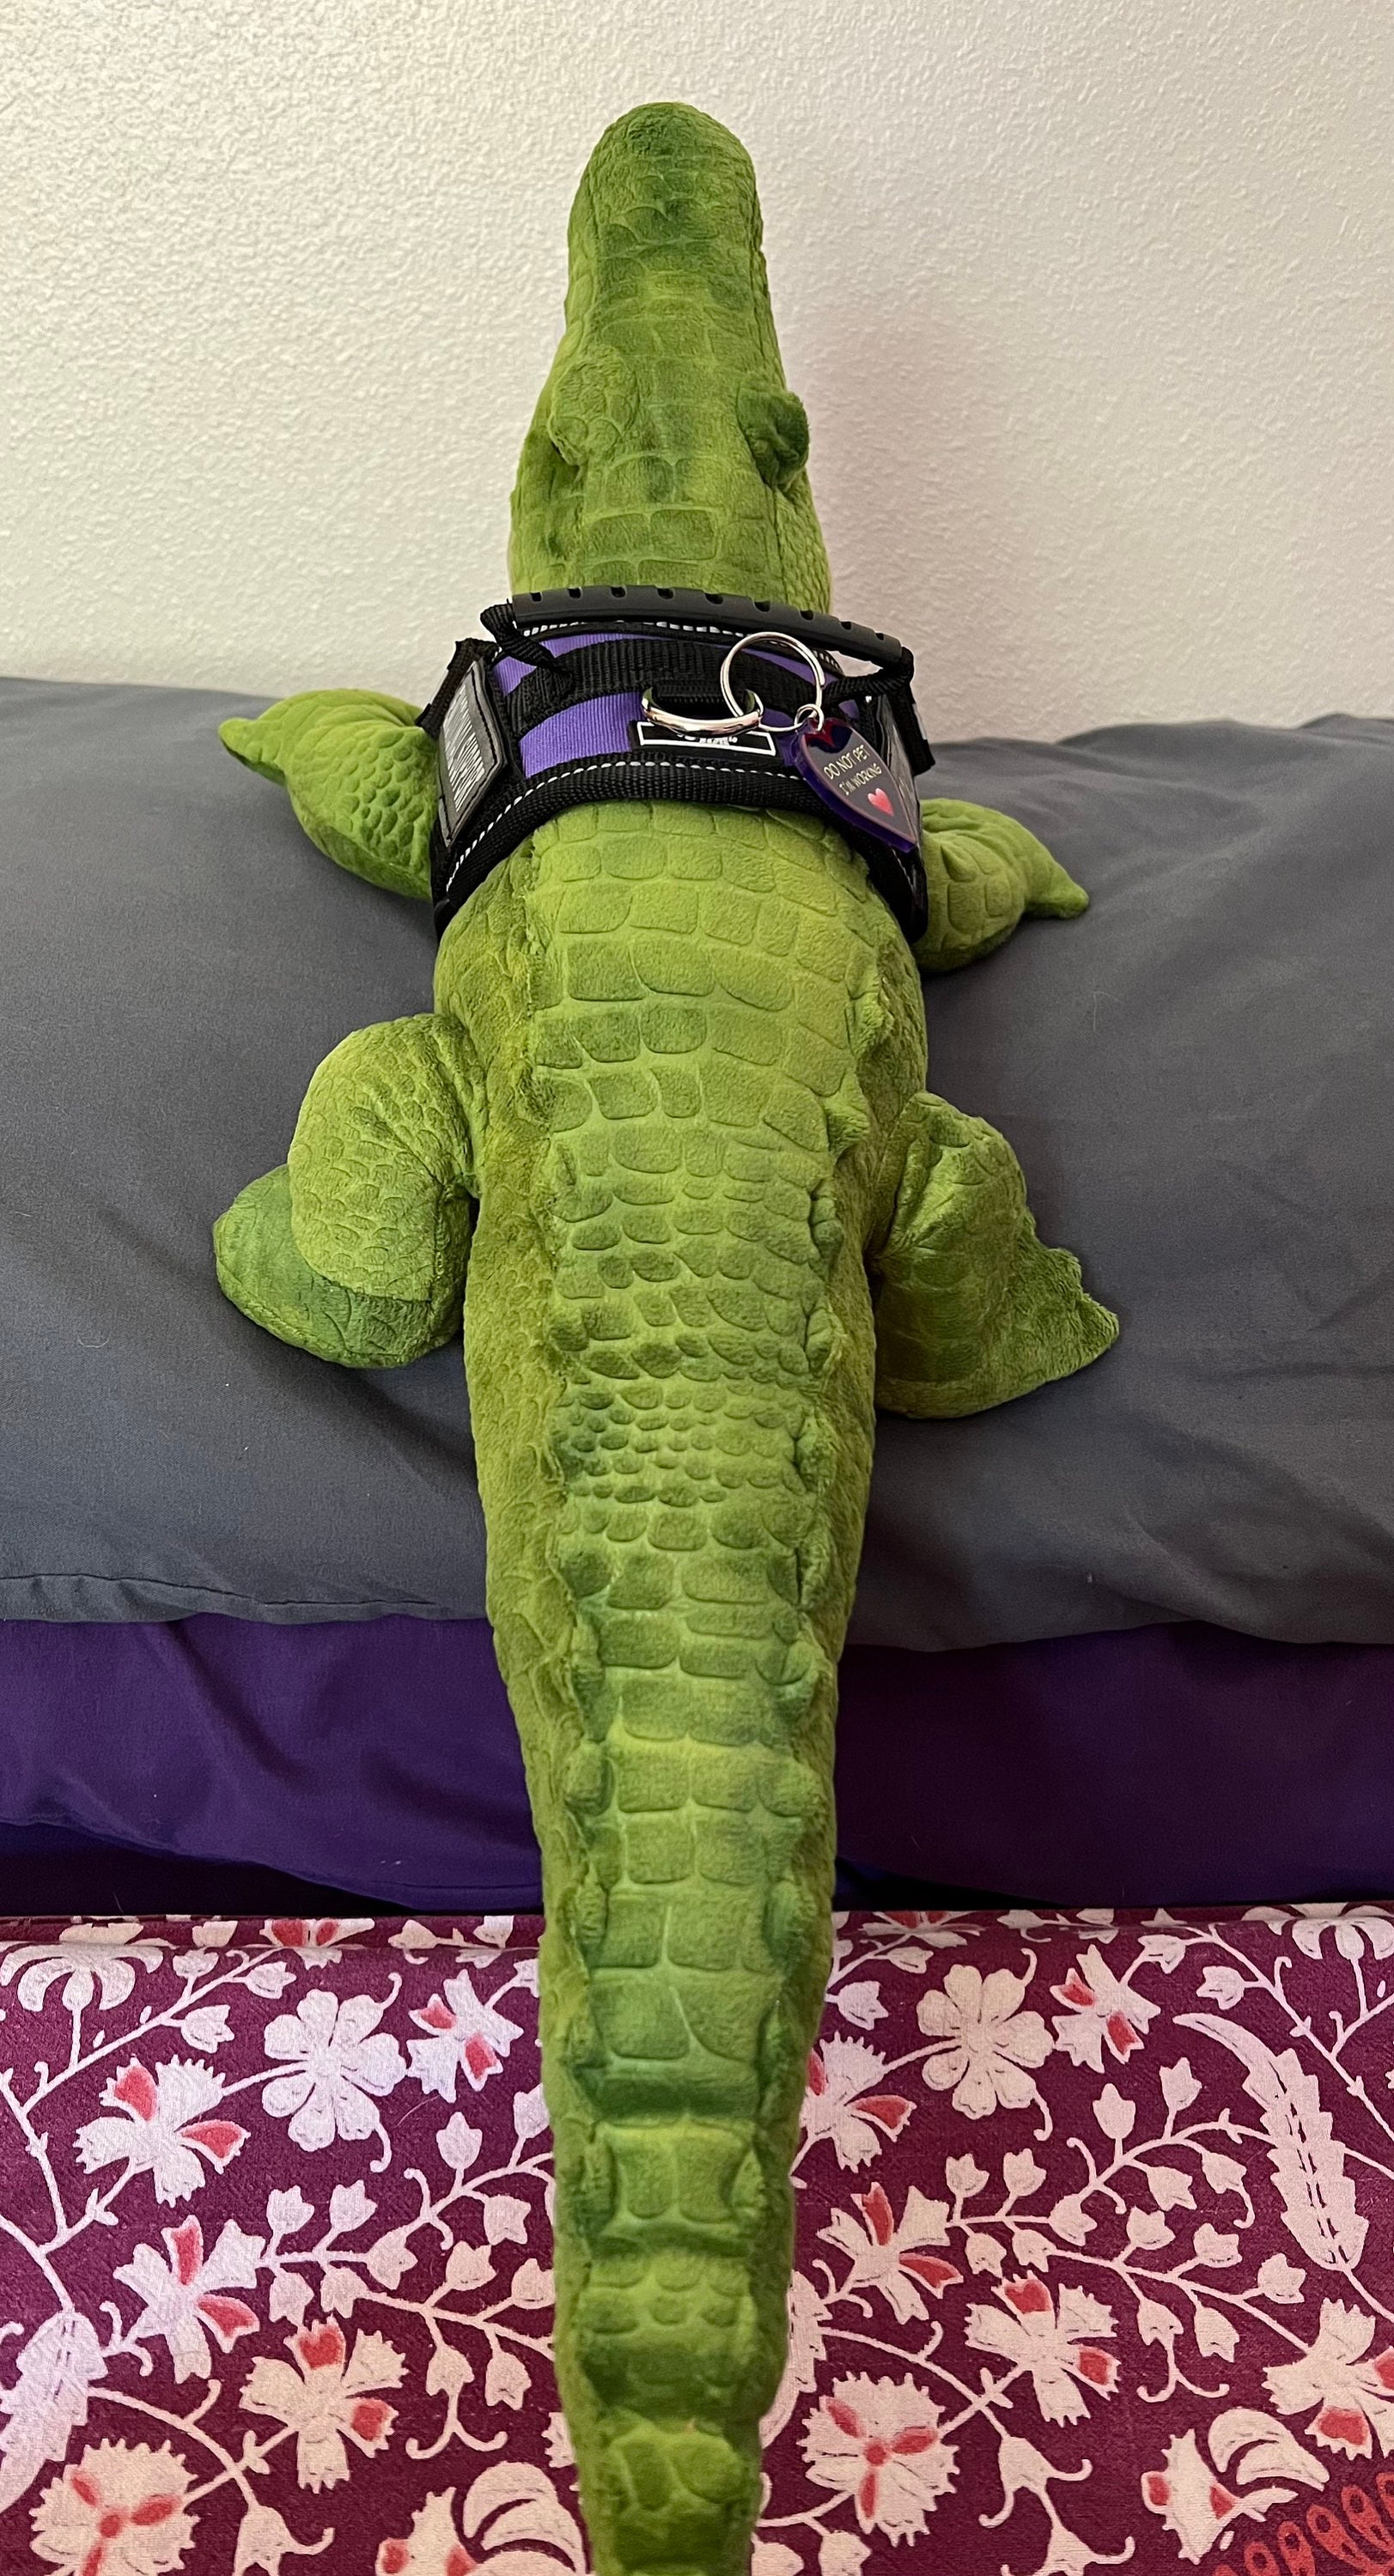 Emotional Support Alligator Crocodile Plush Stuffed Animal 